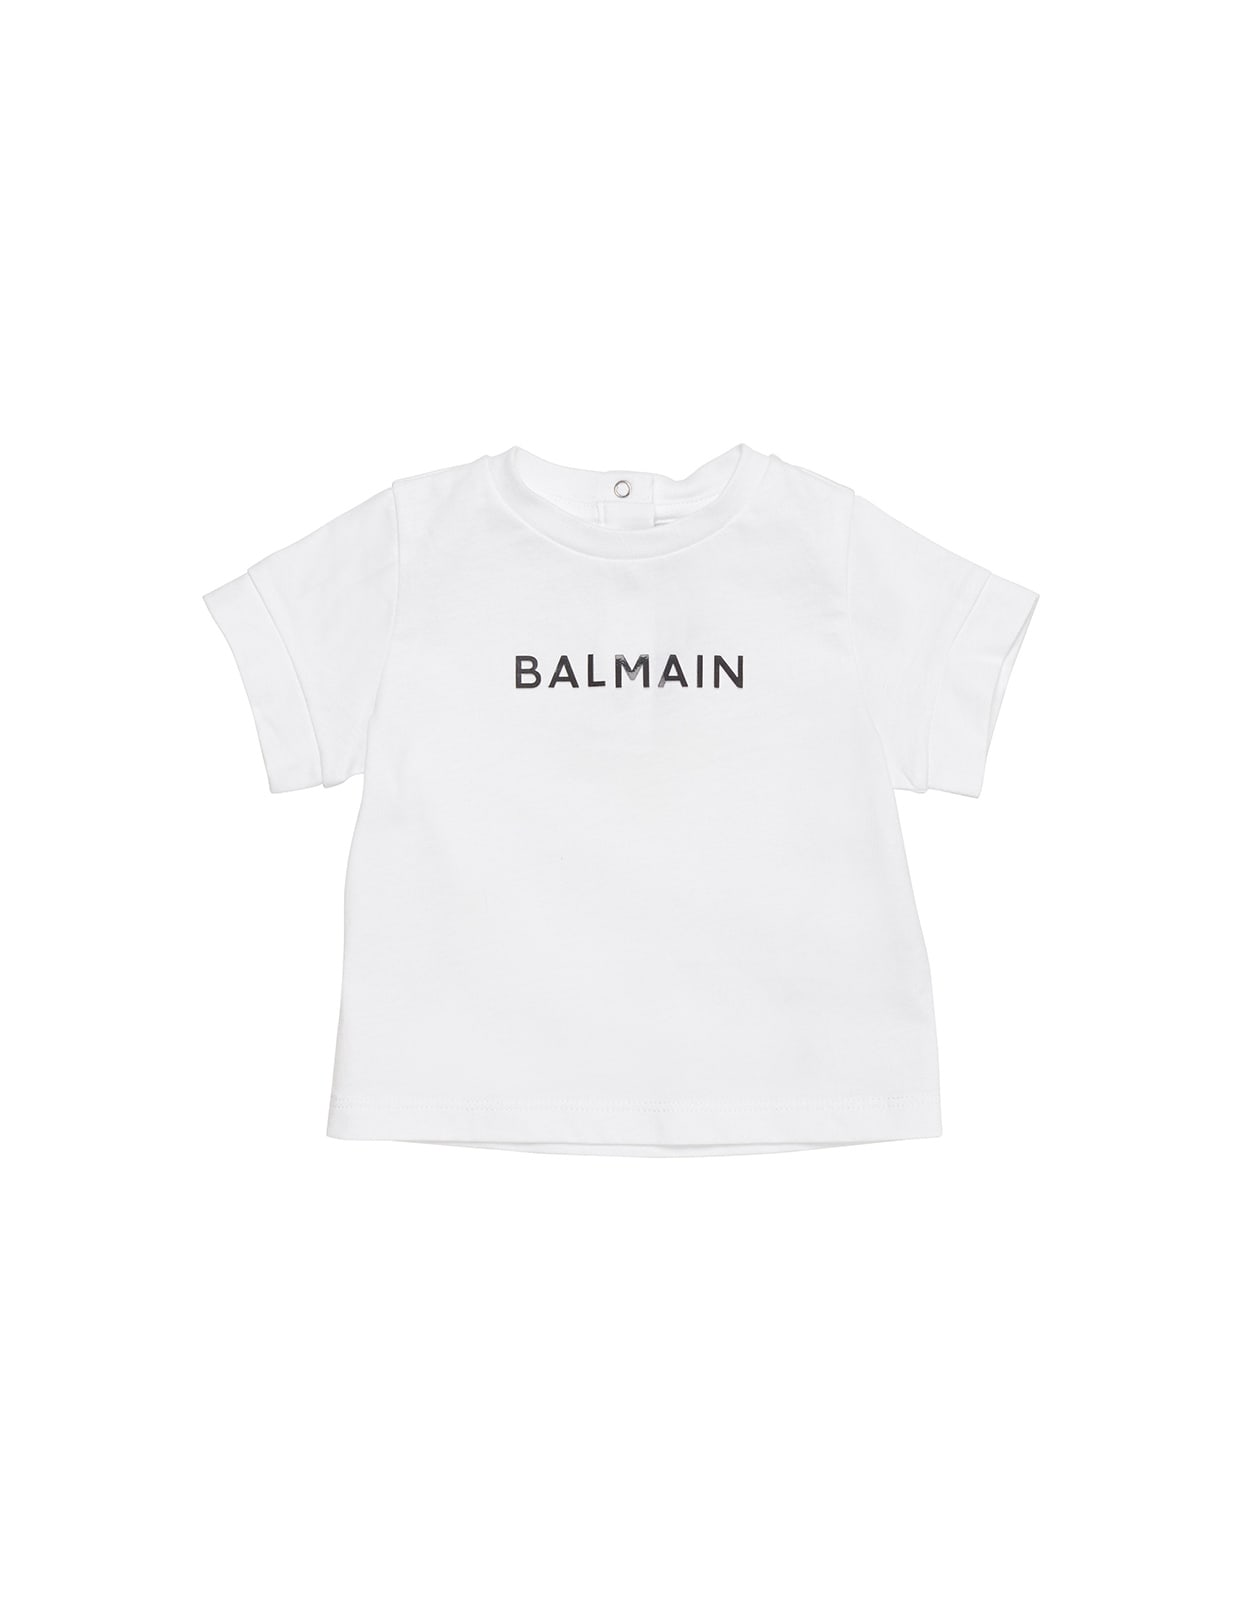 BALMAIN WHITE T-SHIRT WITH CONTRASTING LOGO